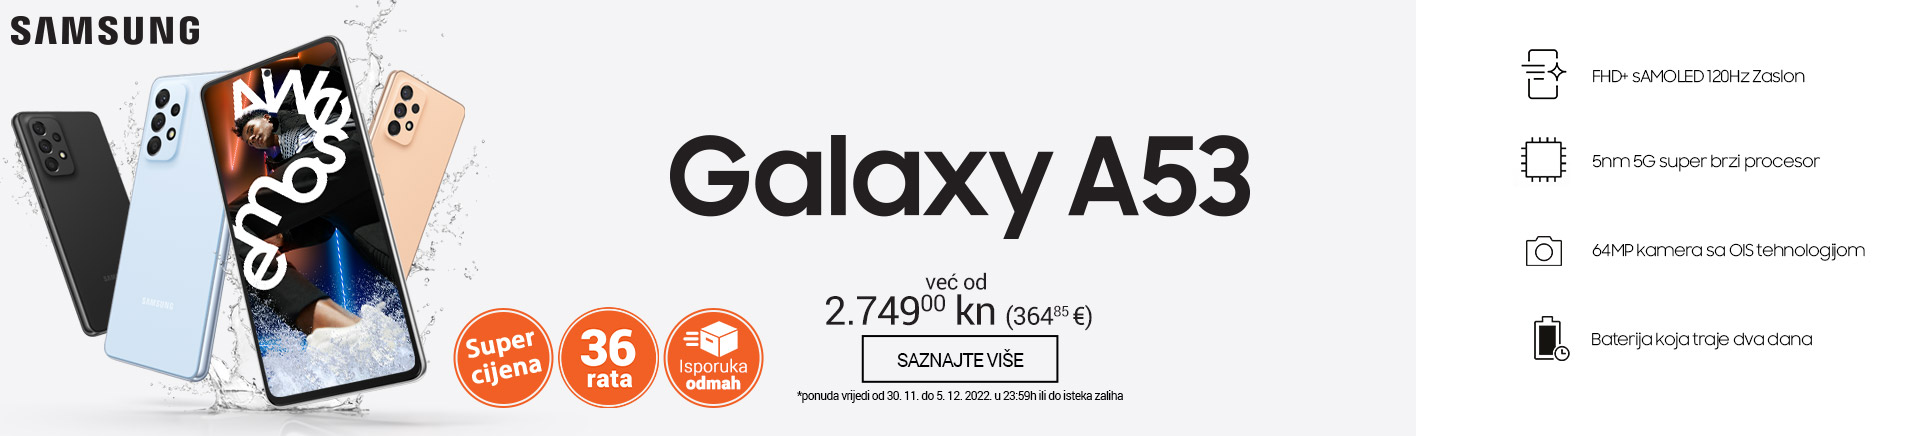 HR Samsung Galaxy A53 MOBILE 380 X 436.jpg